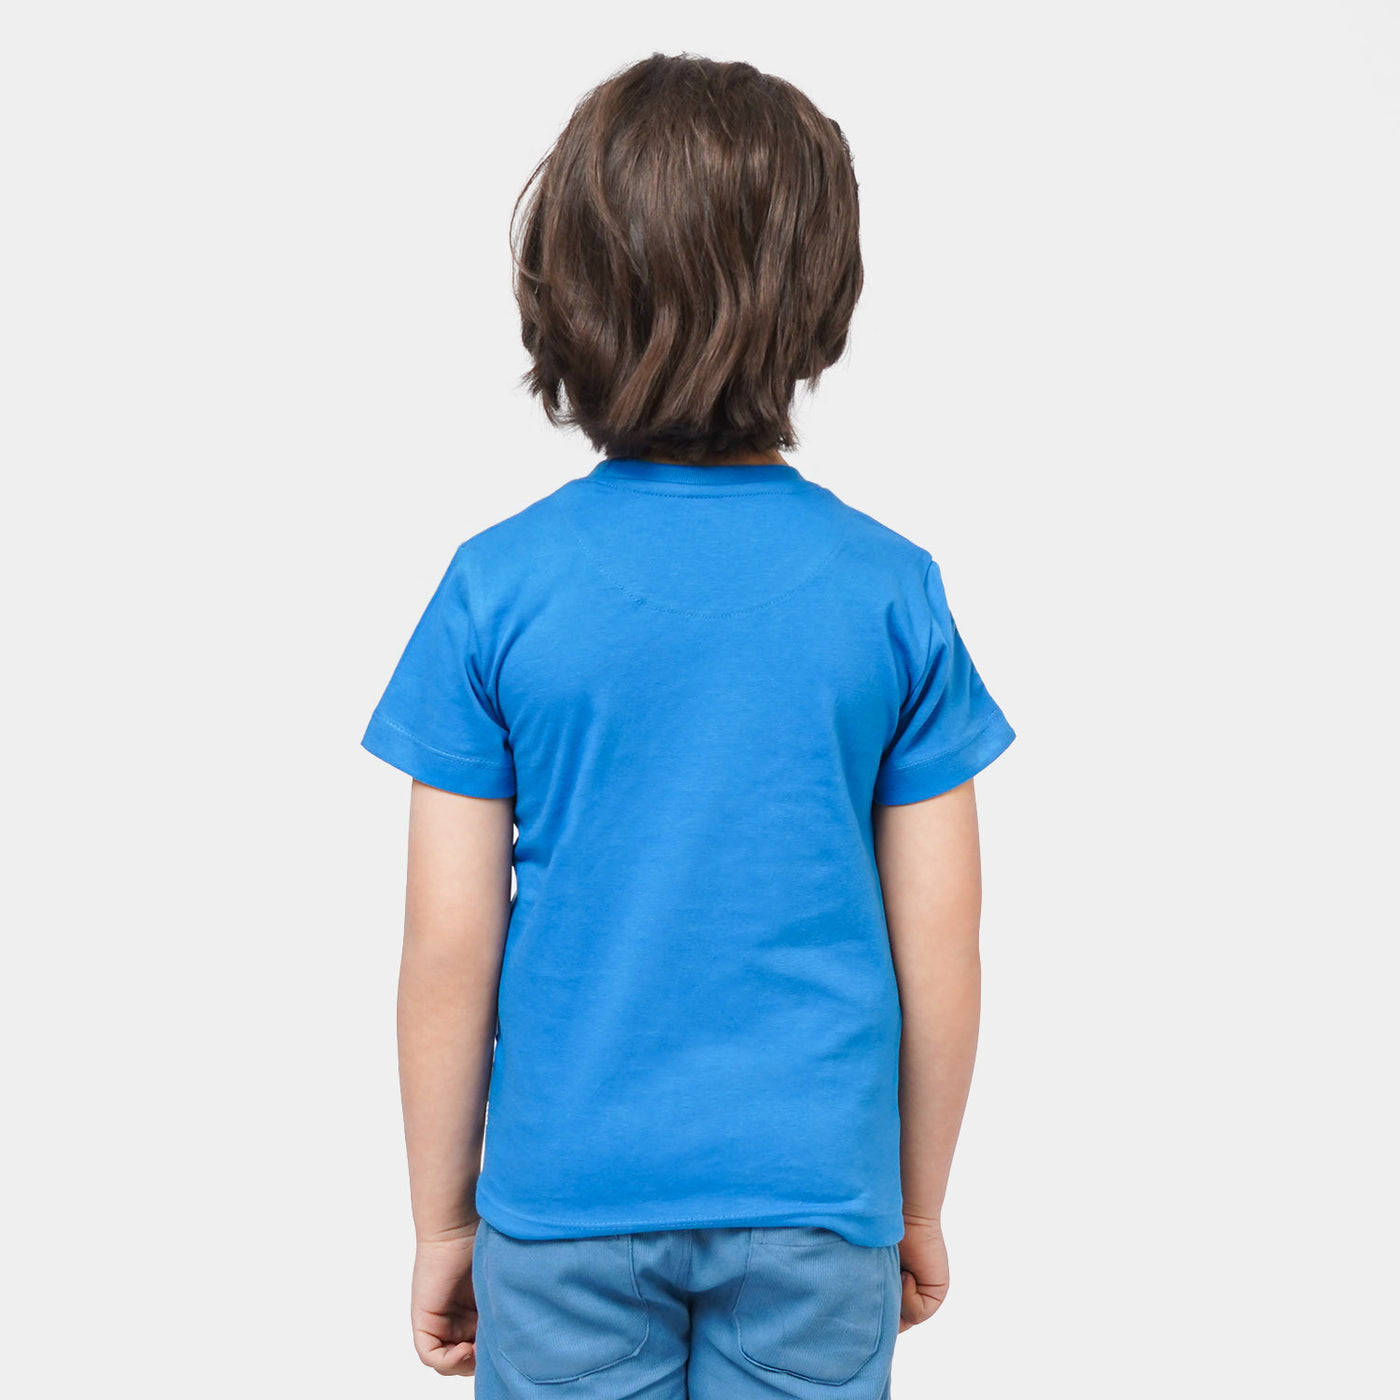 Boys Cotton T-Shirt Triceratops - Blue